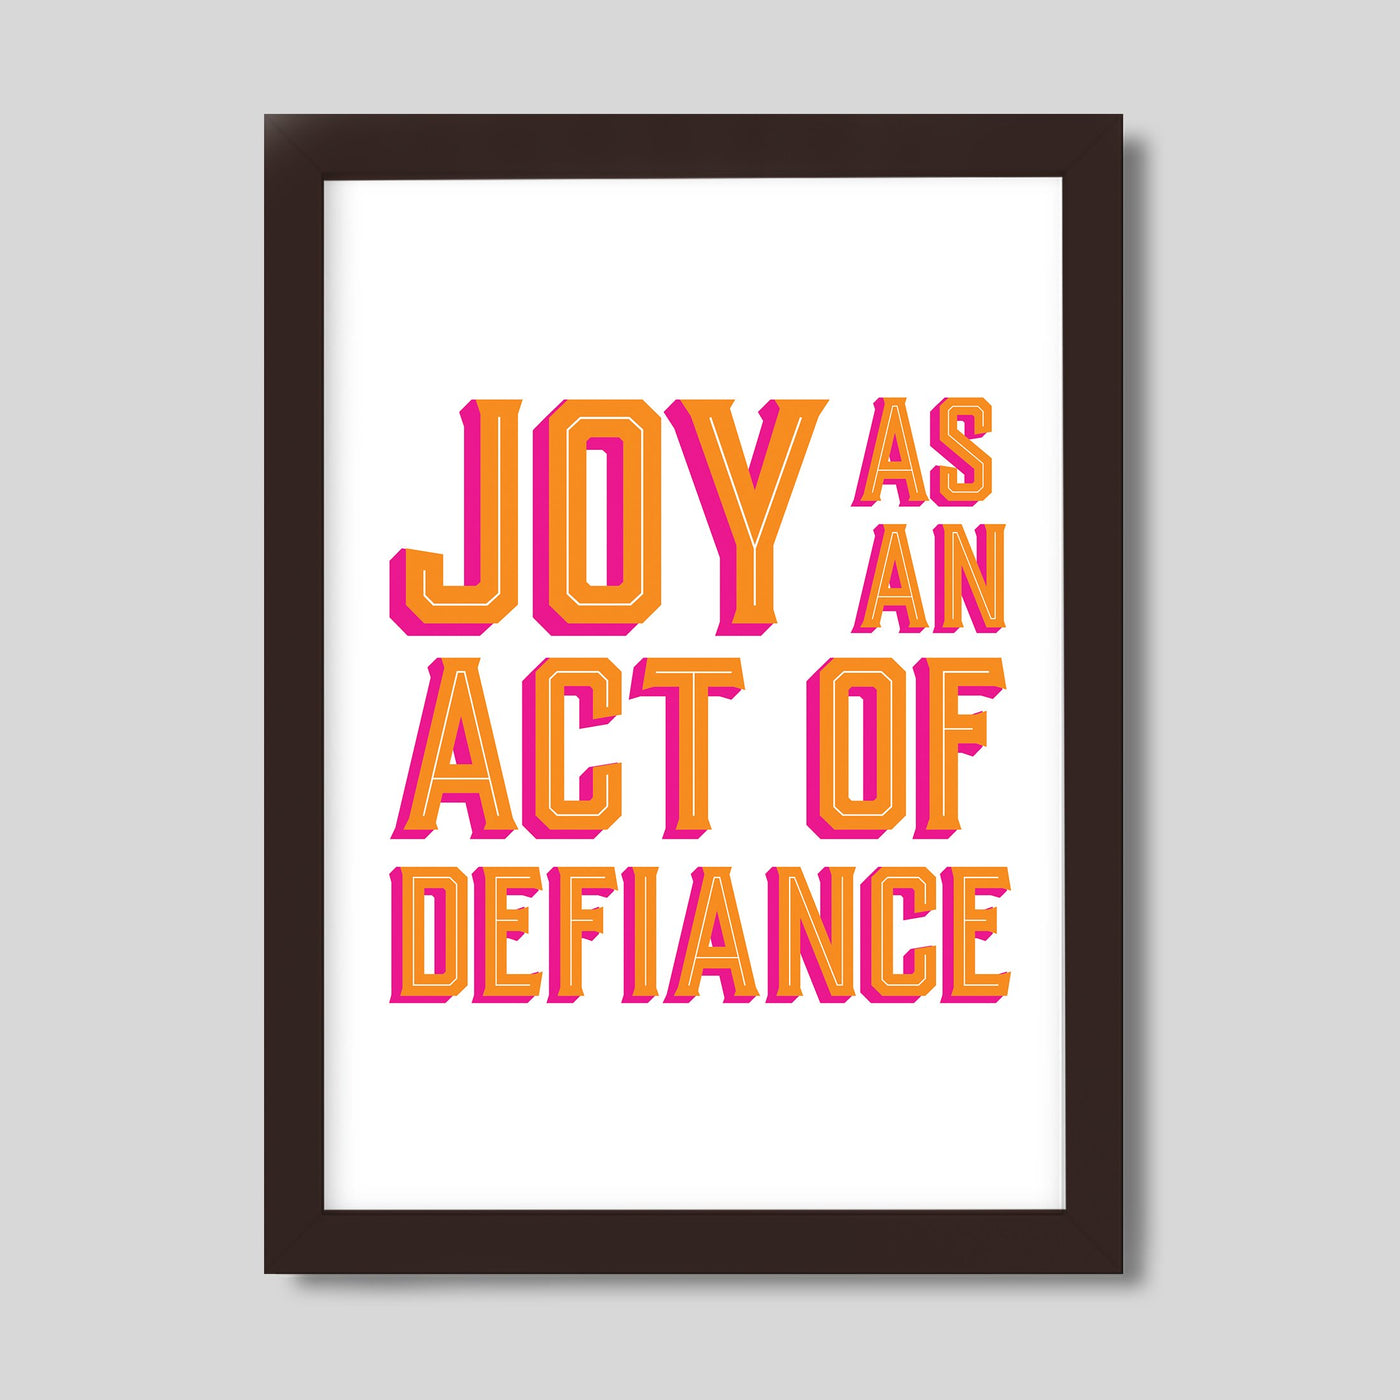 Gallery Prints Joy As An Act of Defiance Print dombezalergii